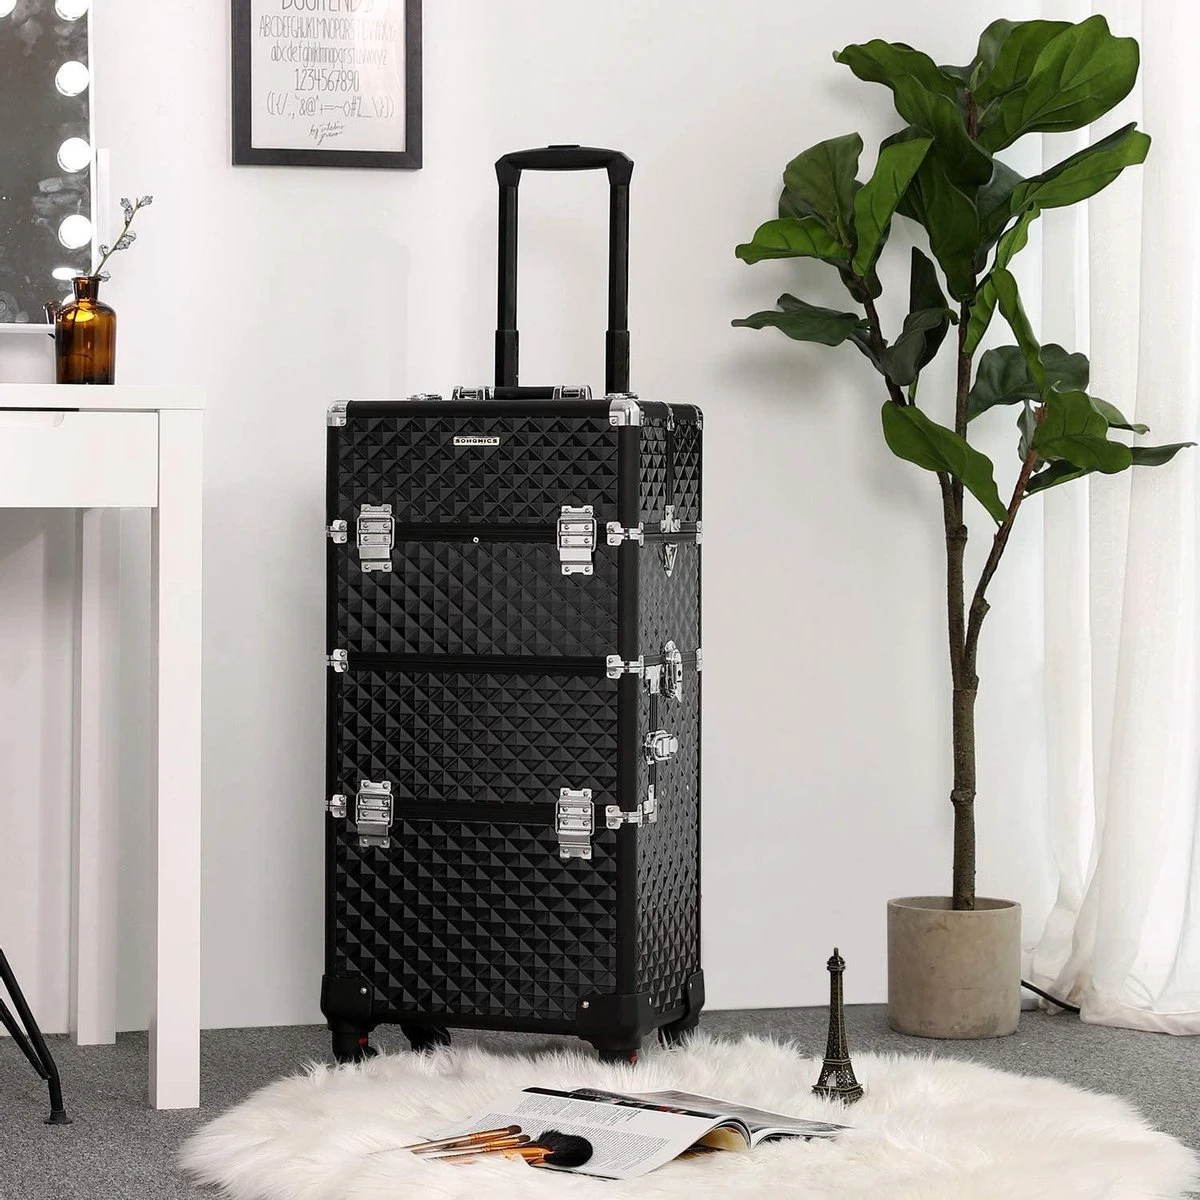 Trolley, make-up koffer, cosmetische koffer, voor nageldesign, make-up koffer met draagtas, zwart - SimpleDeal.nl